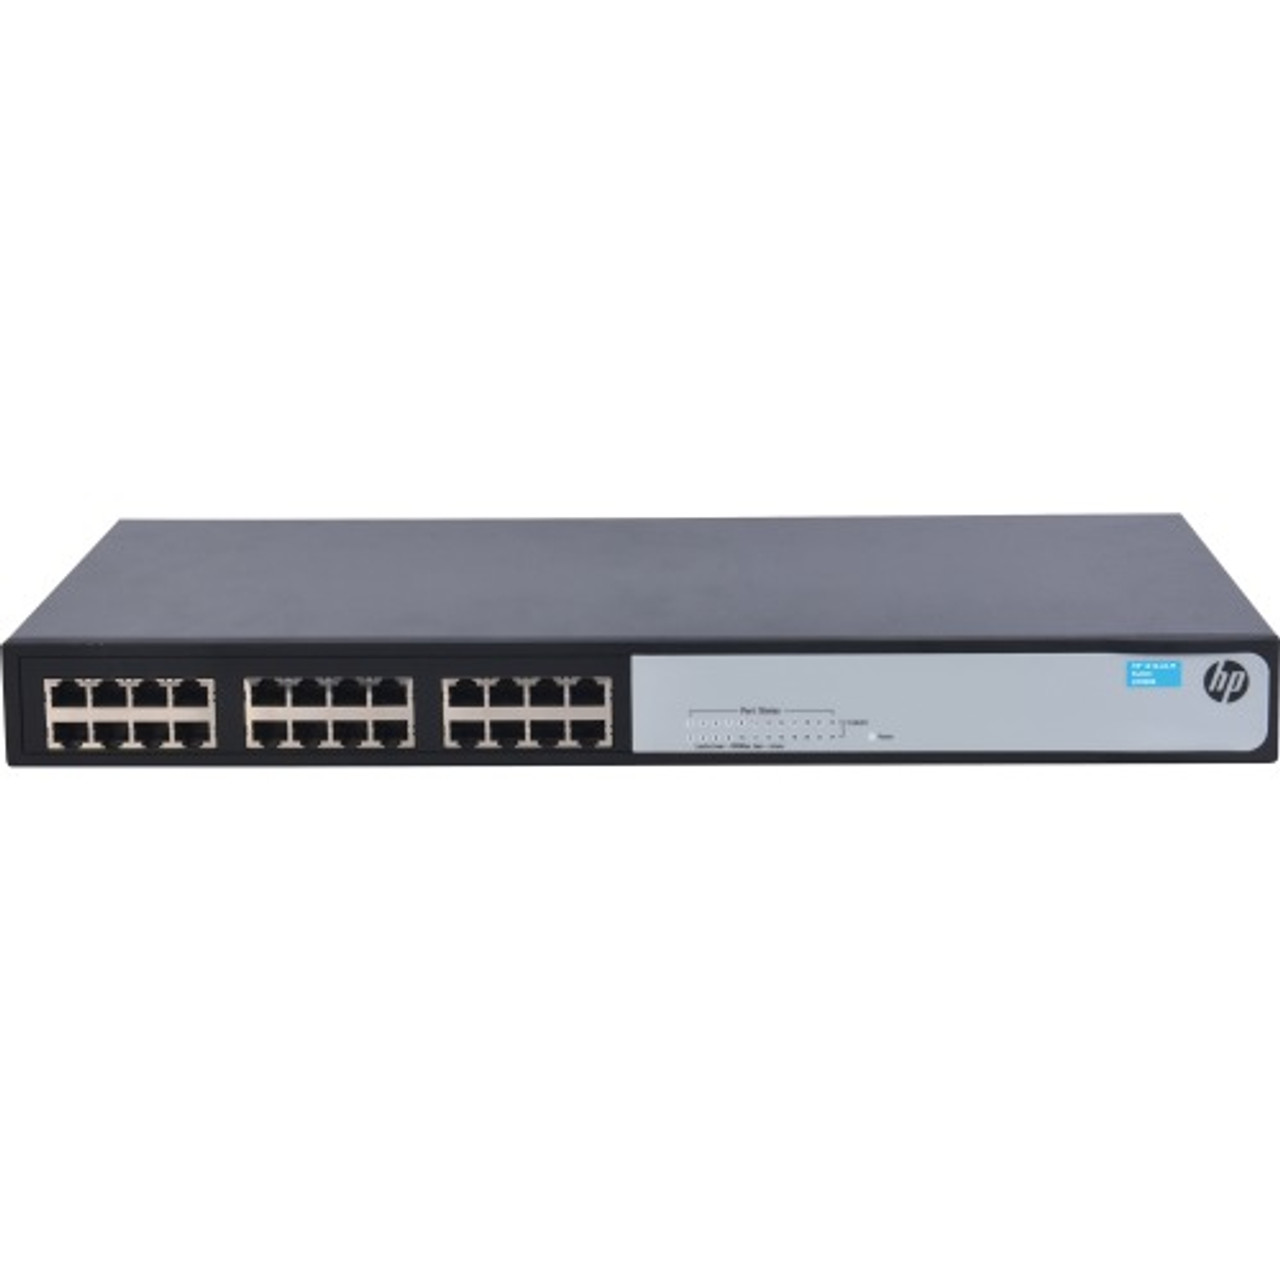 JD986BS#ABA HP 1410-24-R 24-Ports RJ-45 10/100Base-T Unmanaged Layer 2 Rack-Mountable 1U Fast Ethernet Switch (Refurbished)